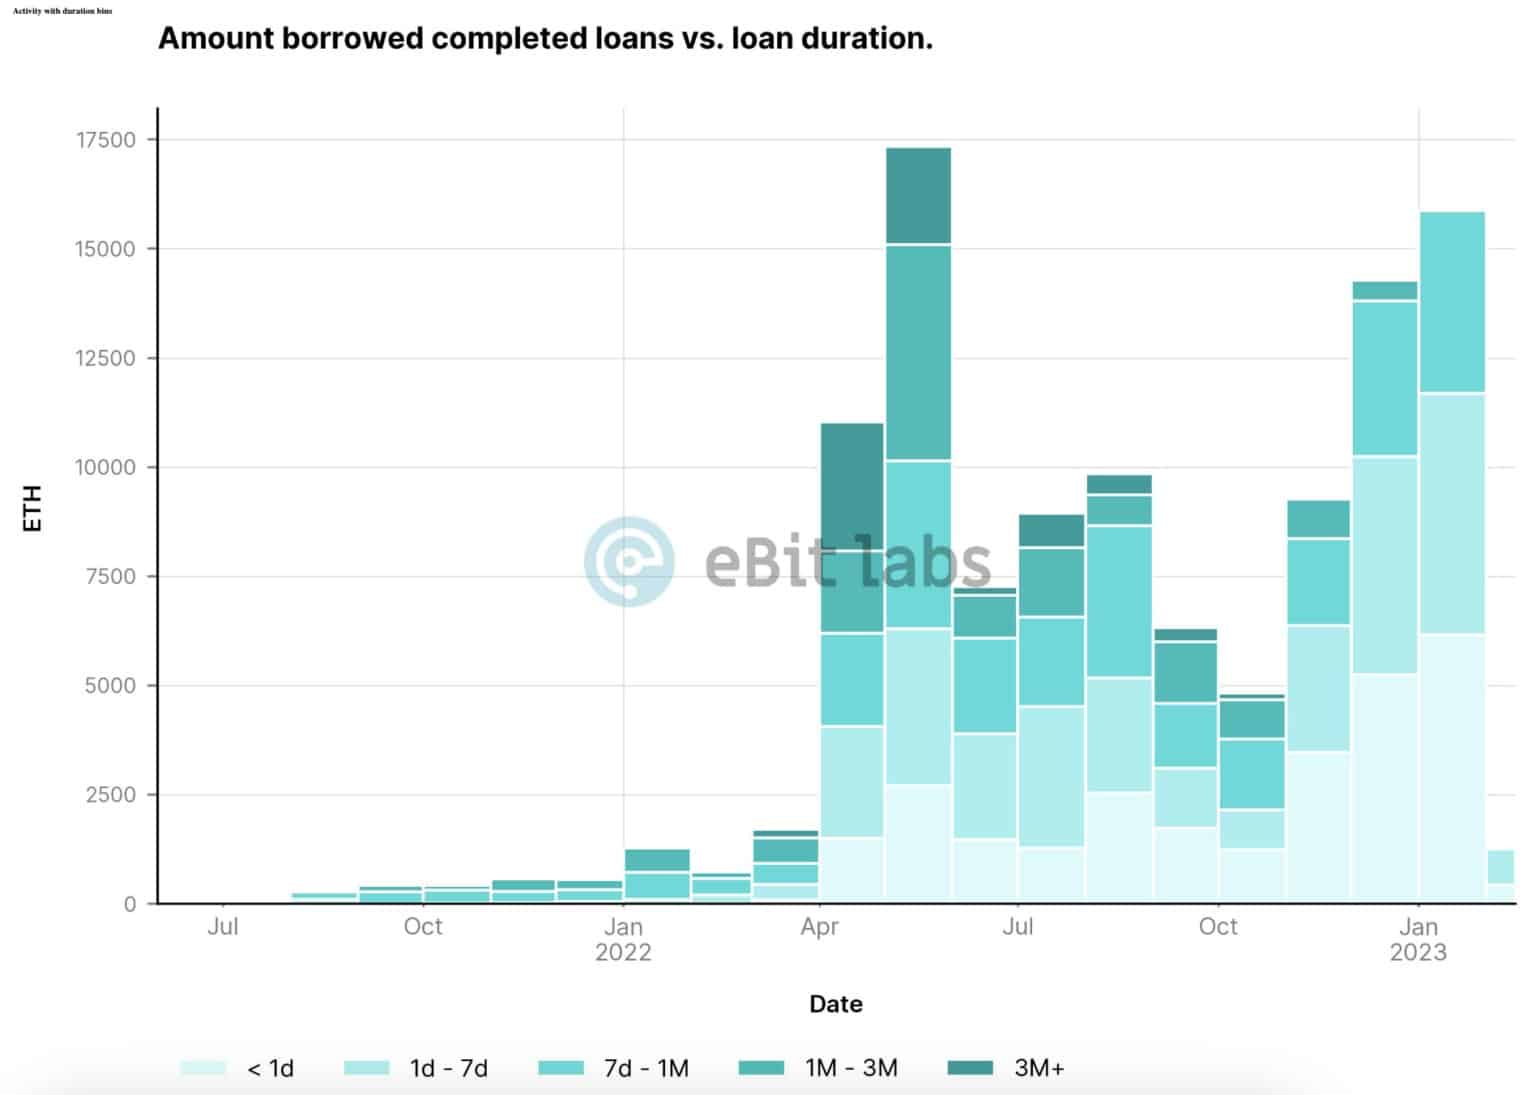 BAYC Borrowing in ETH (Fonte: eBitLabs)